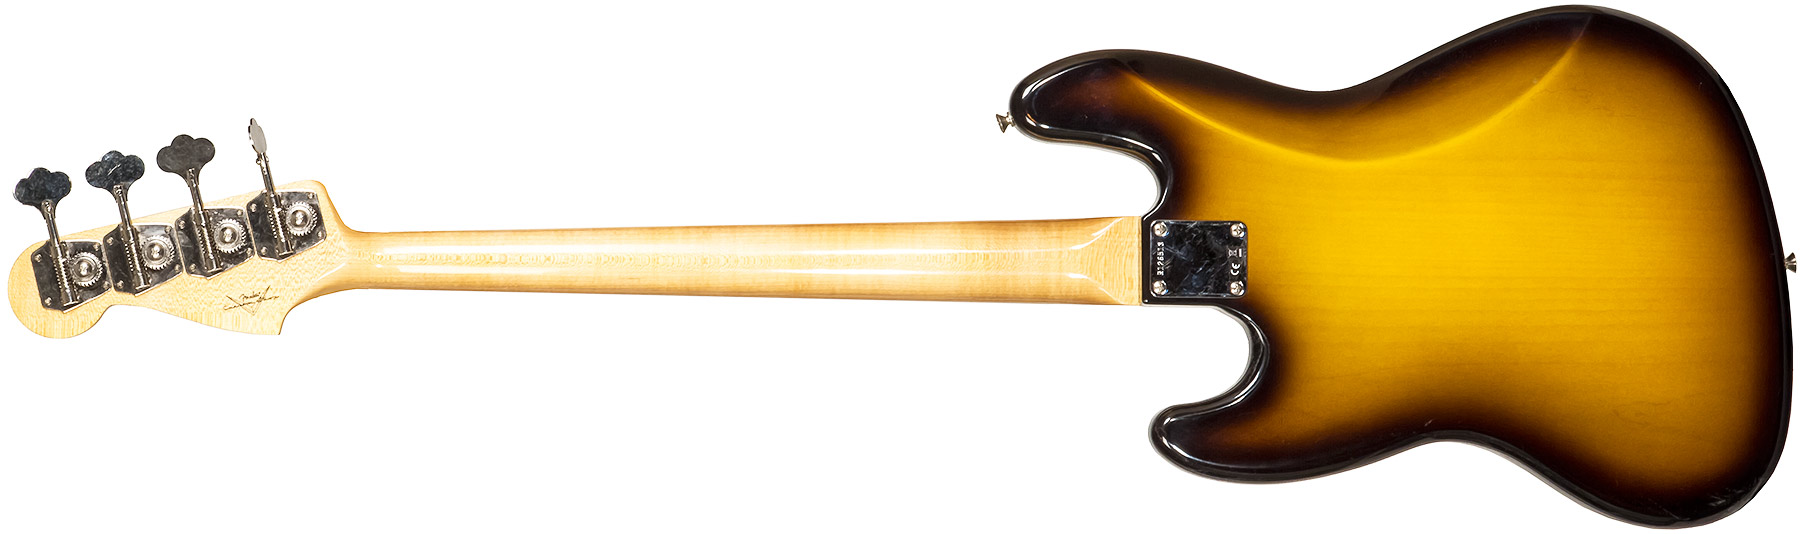 Fender Custom Shop Jazz Bass 1964 Rw #r126513 - Closet Classic 2-color Sunburst - Bajo eléctrico de cuerpo sólido - Variation 1